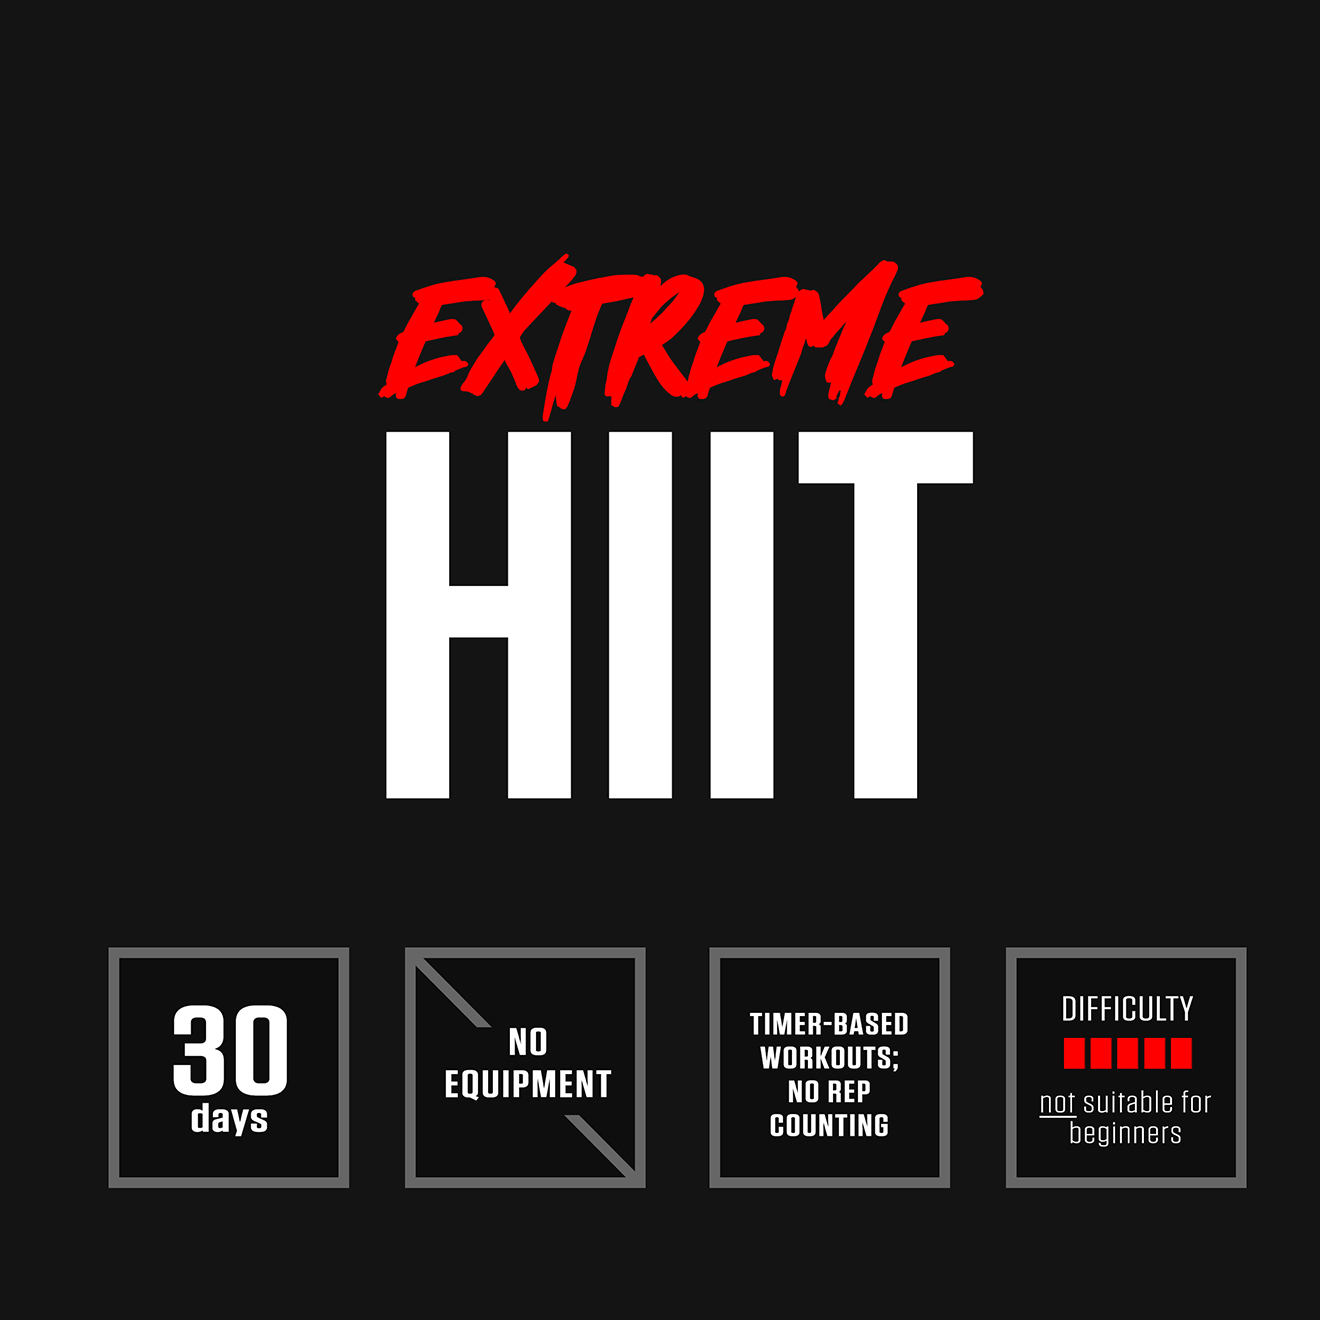 Extreme HIIT